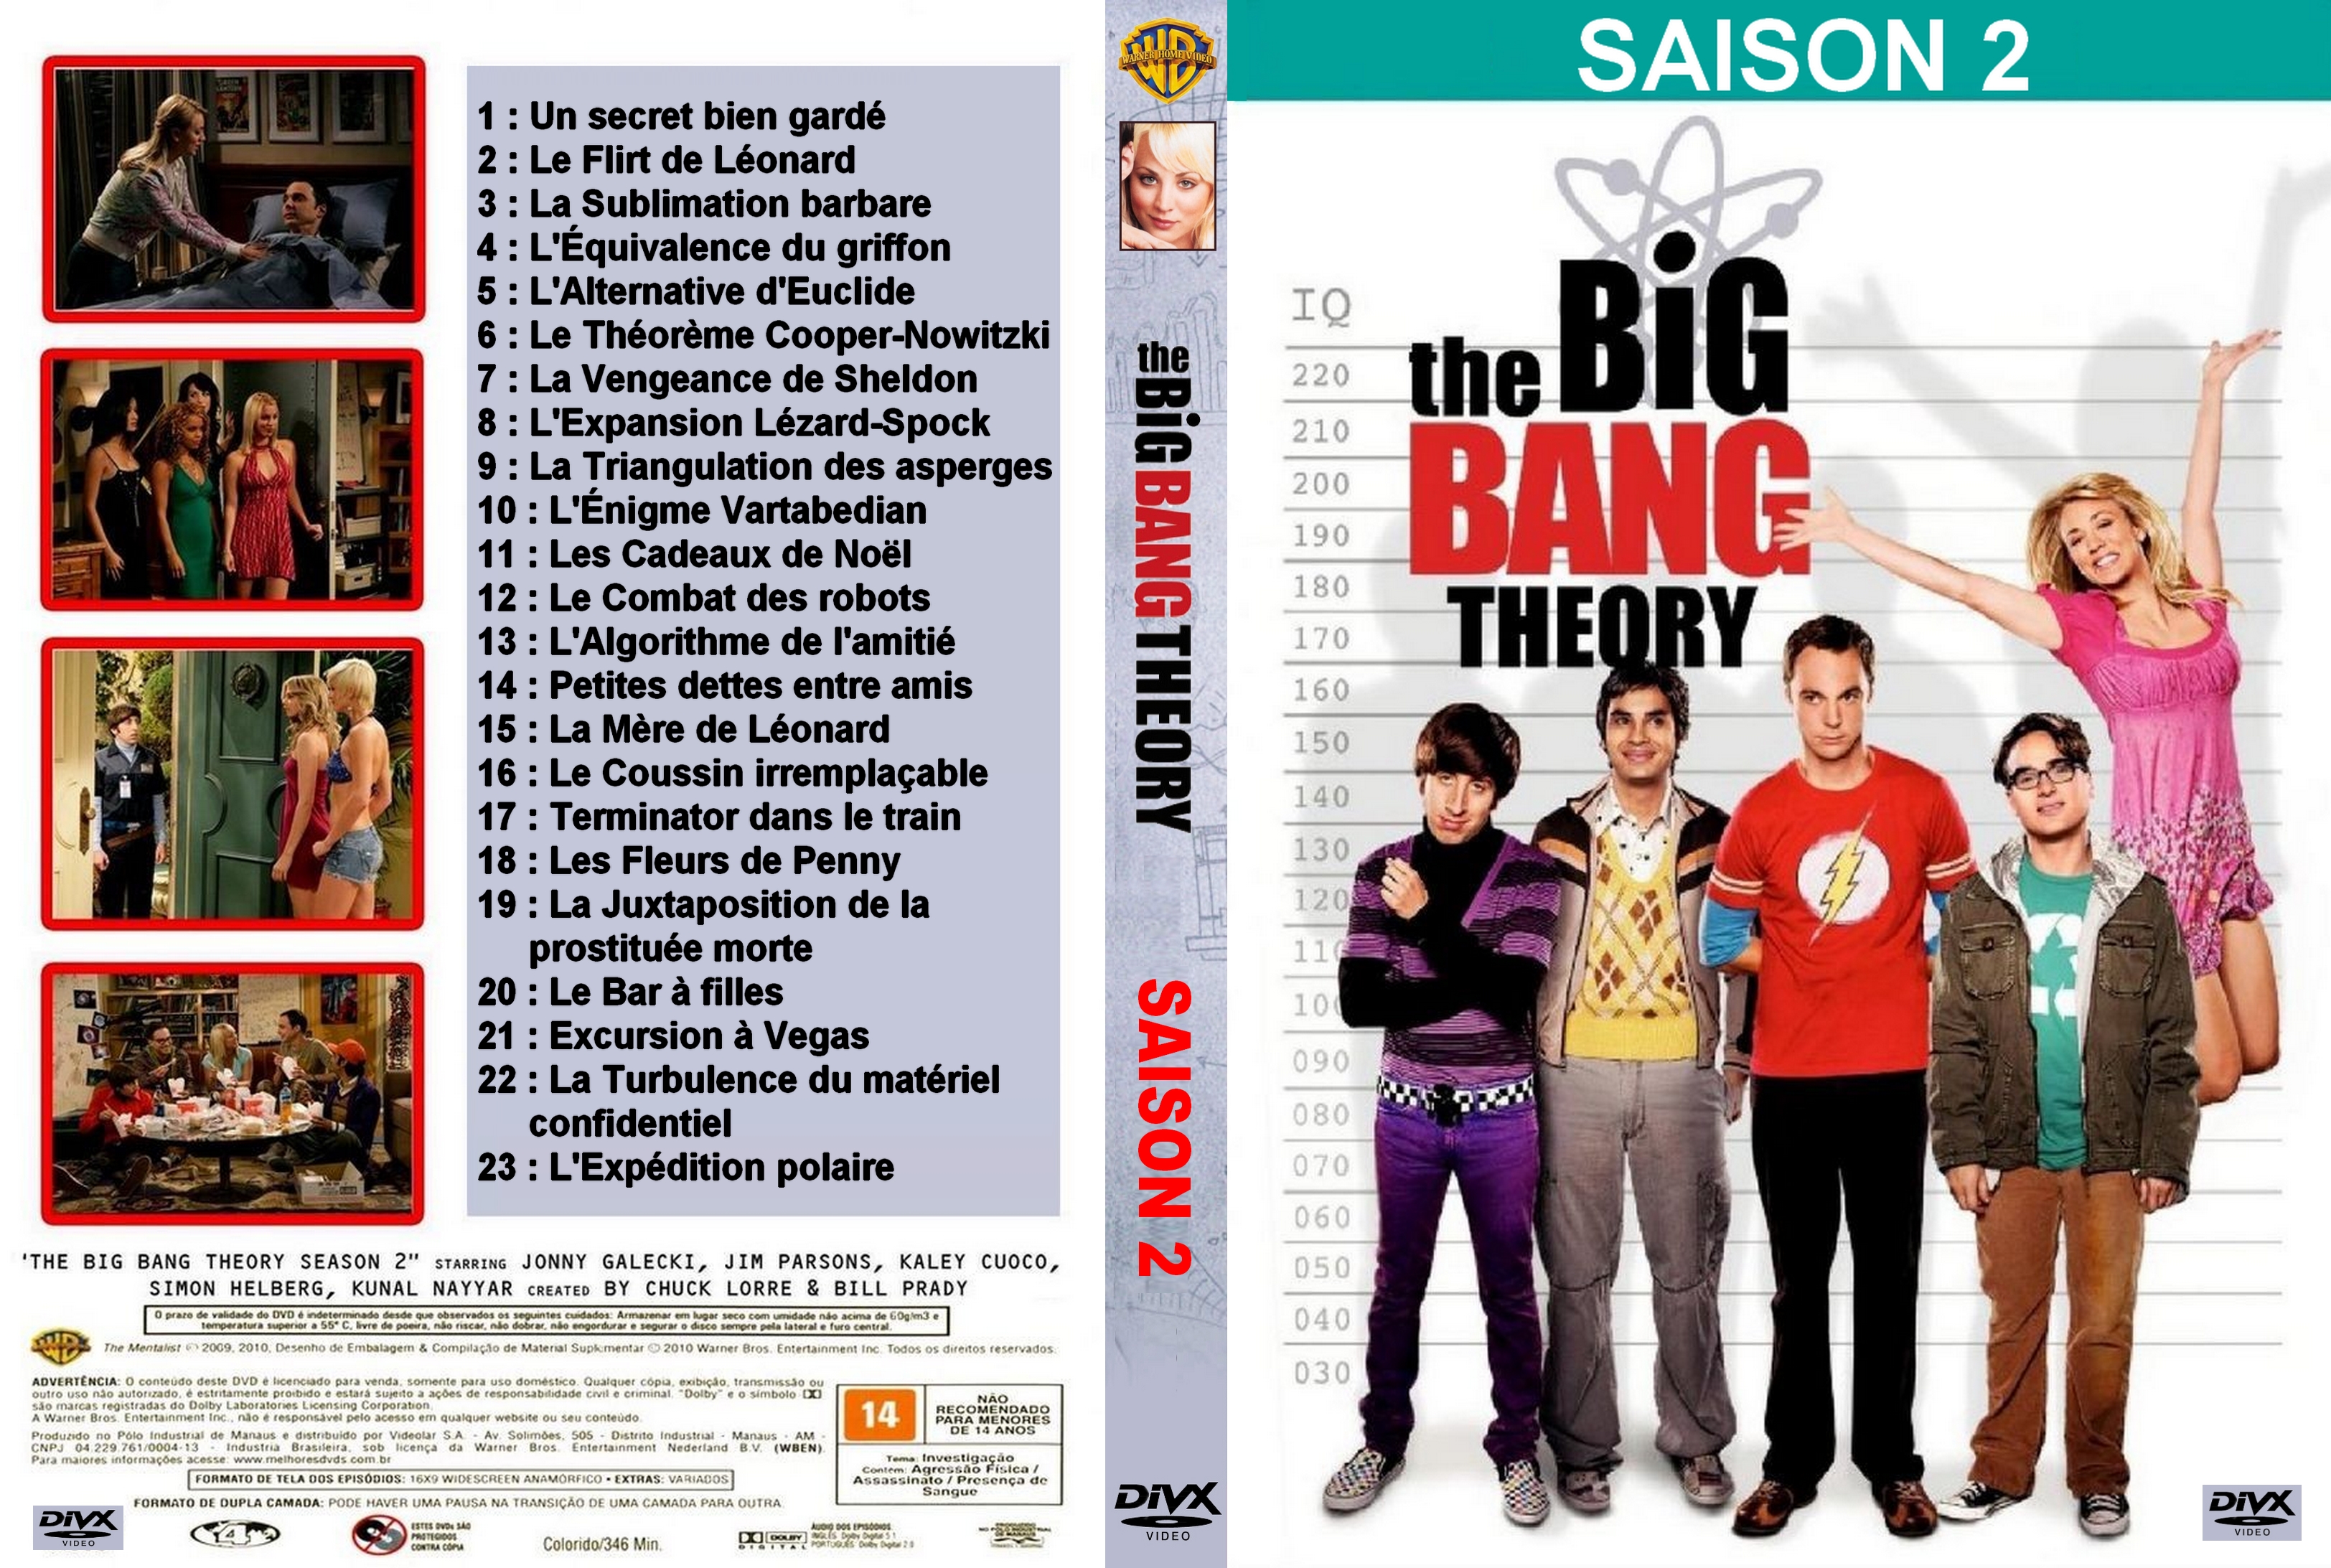 Jaquette DVD The Big Bang Theory Saison 2 custom